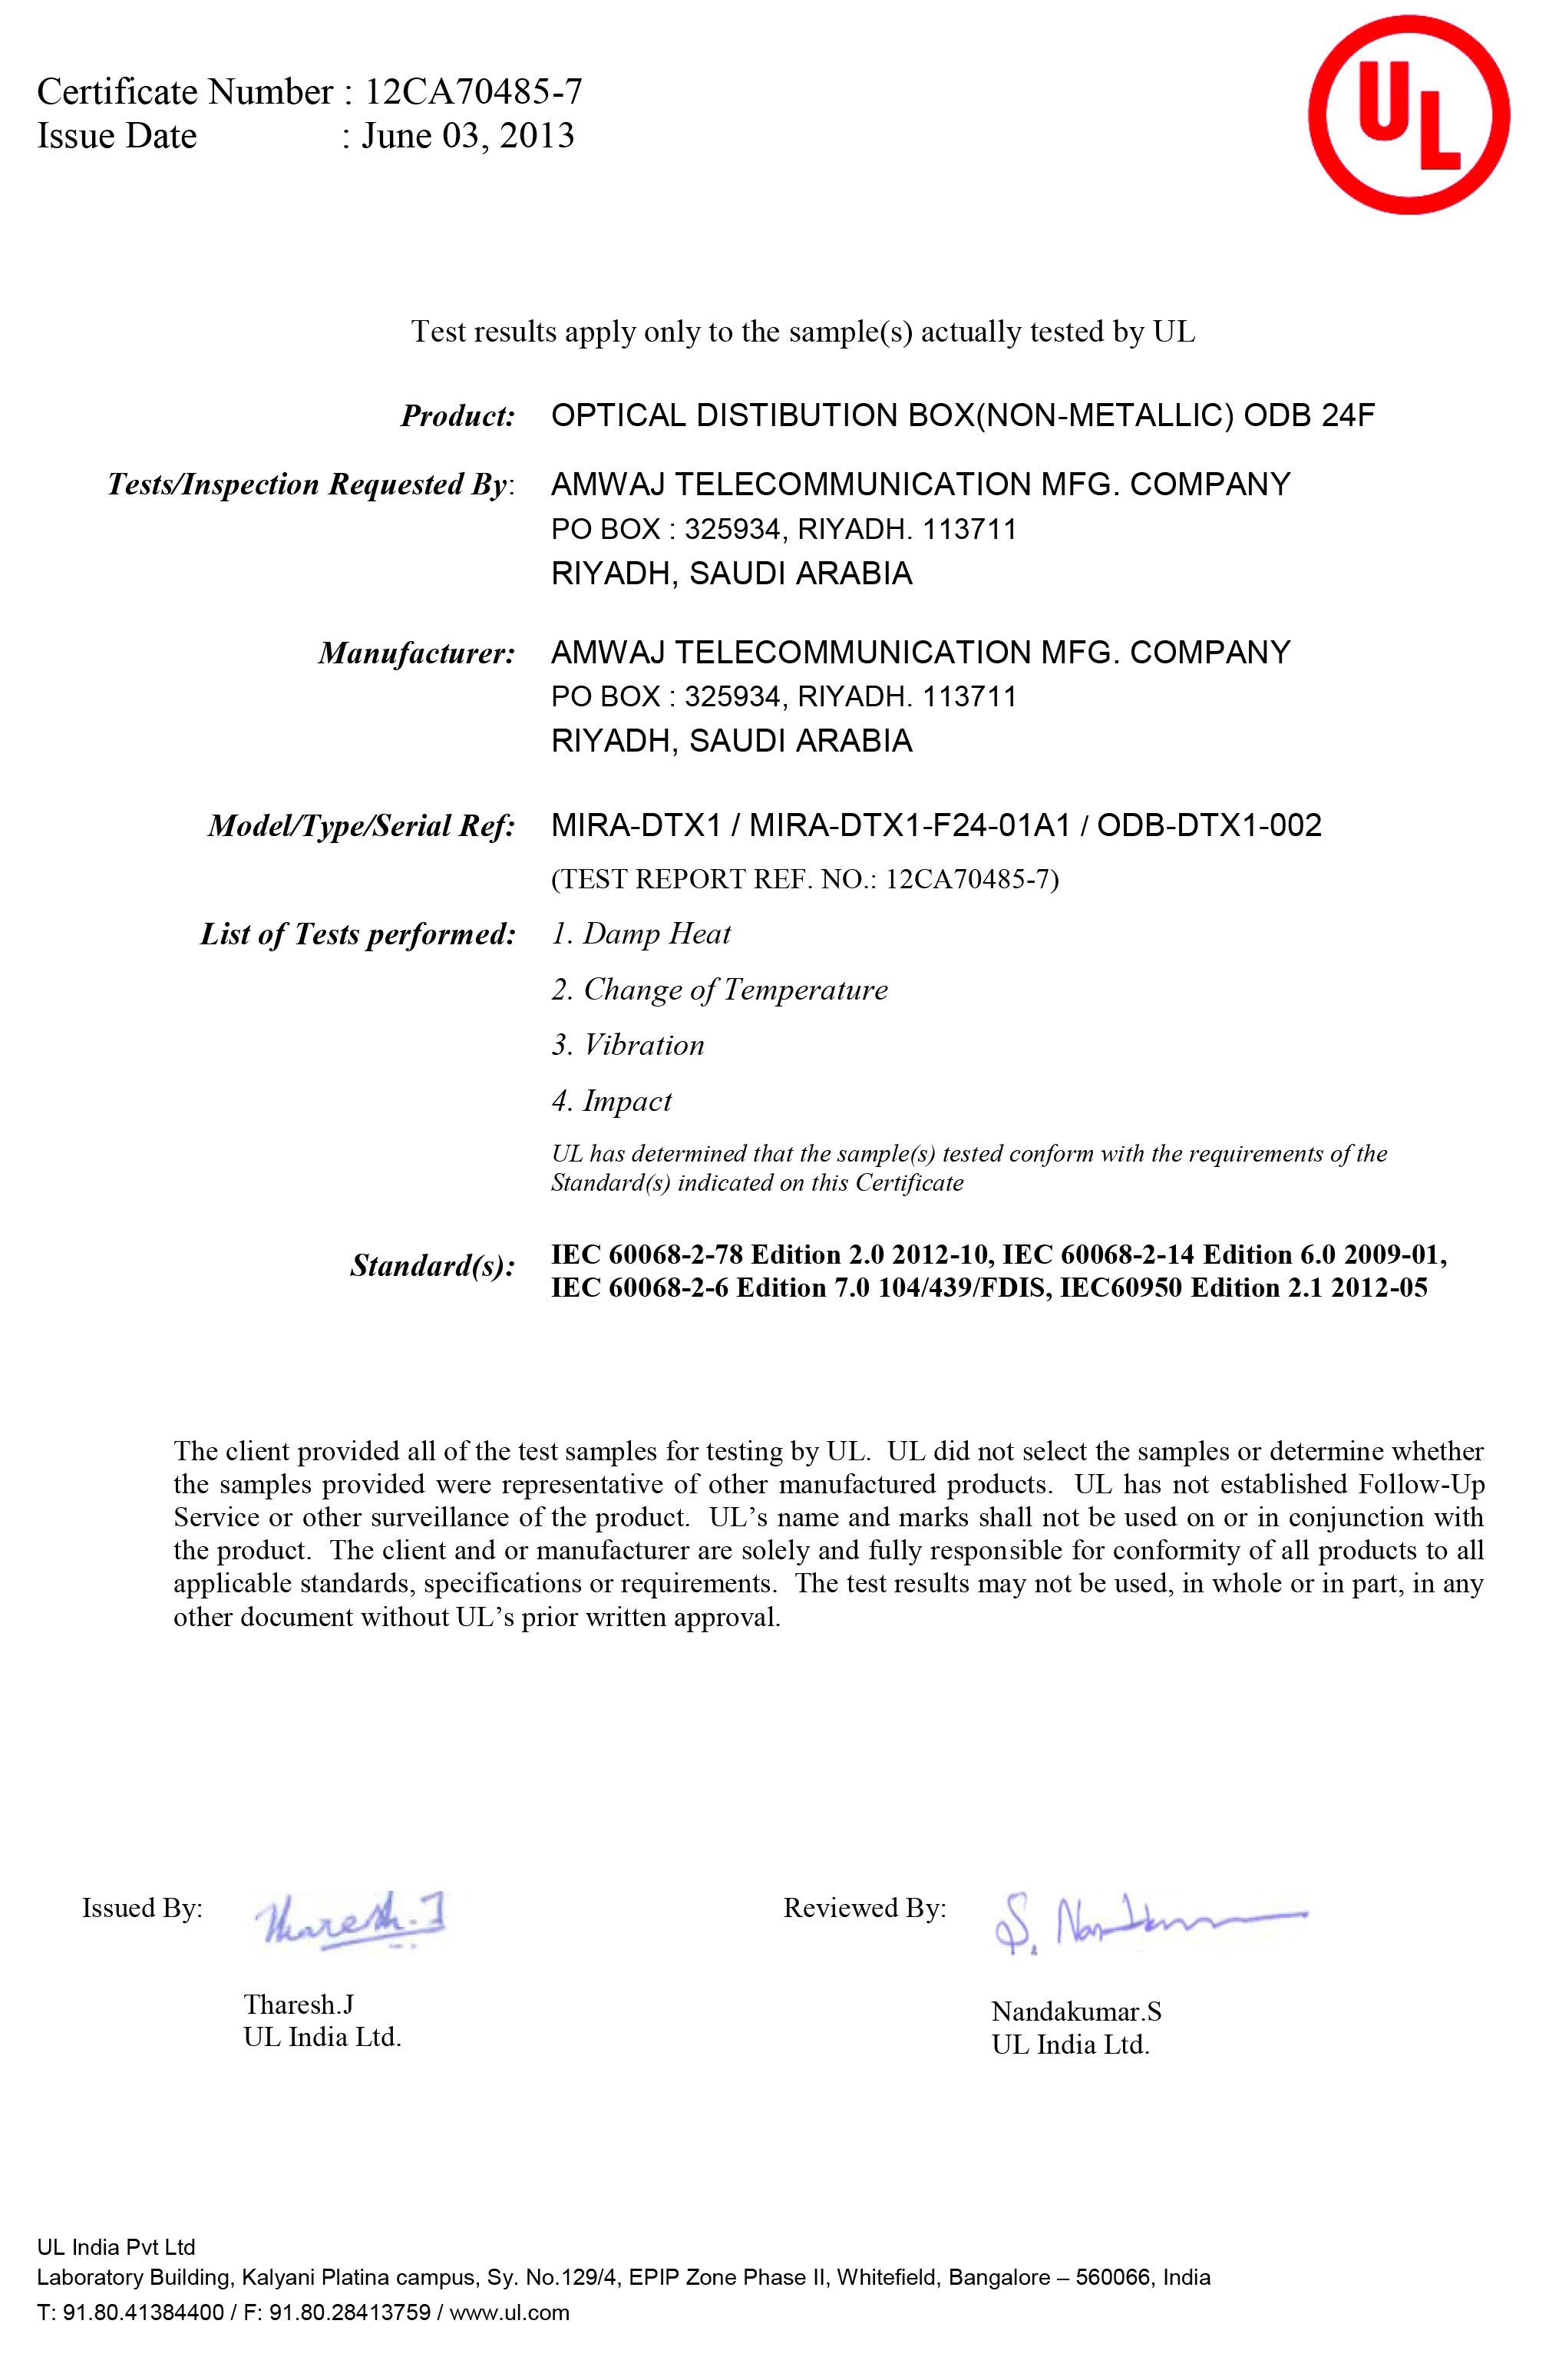 UL Certificate for ODB 24F